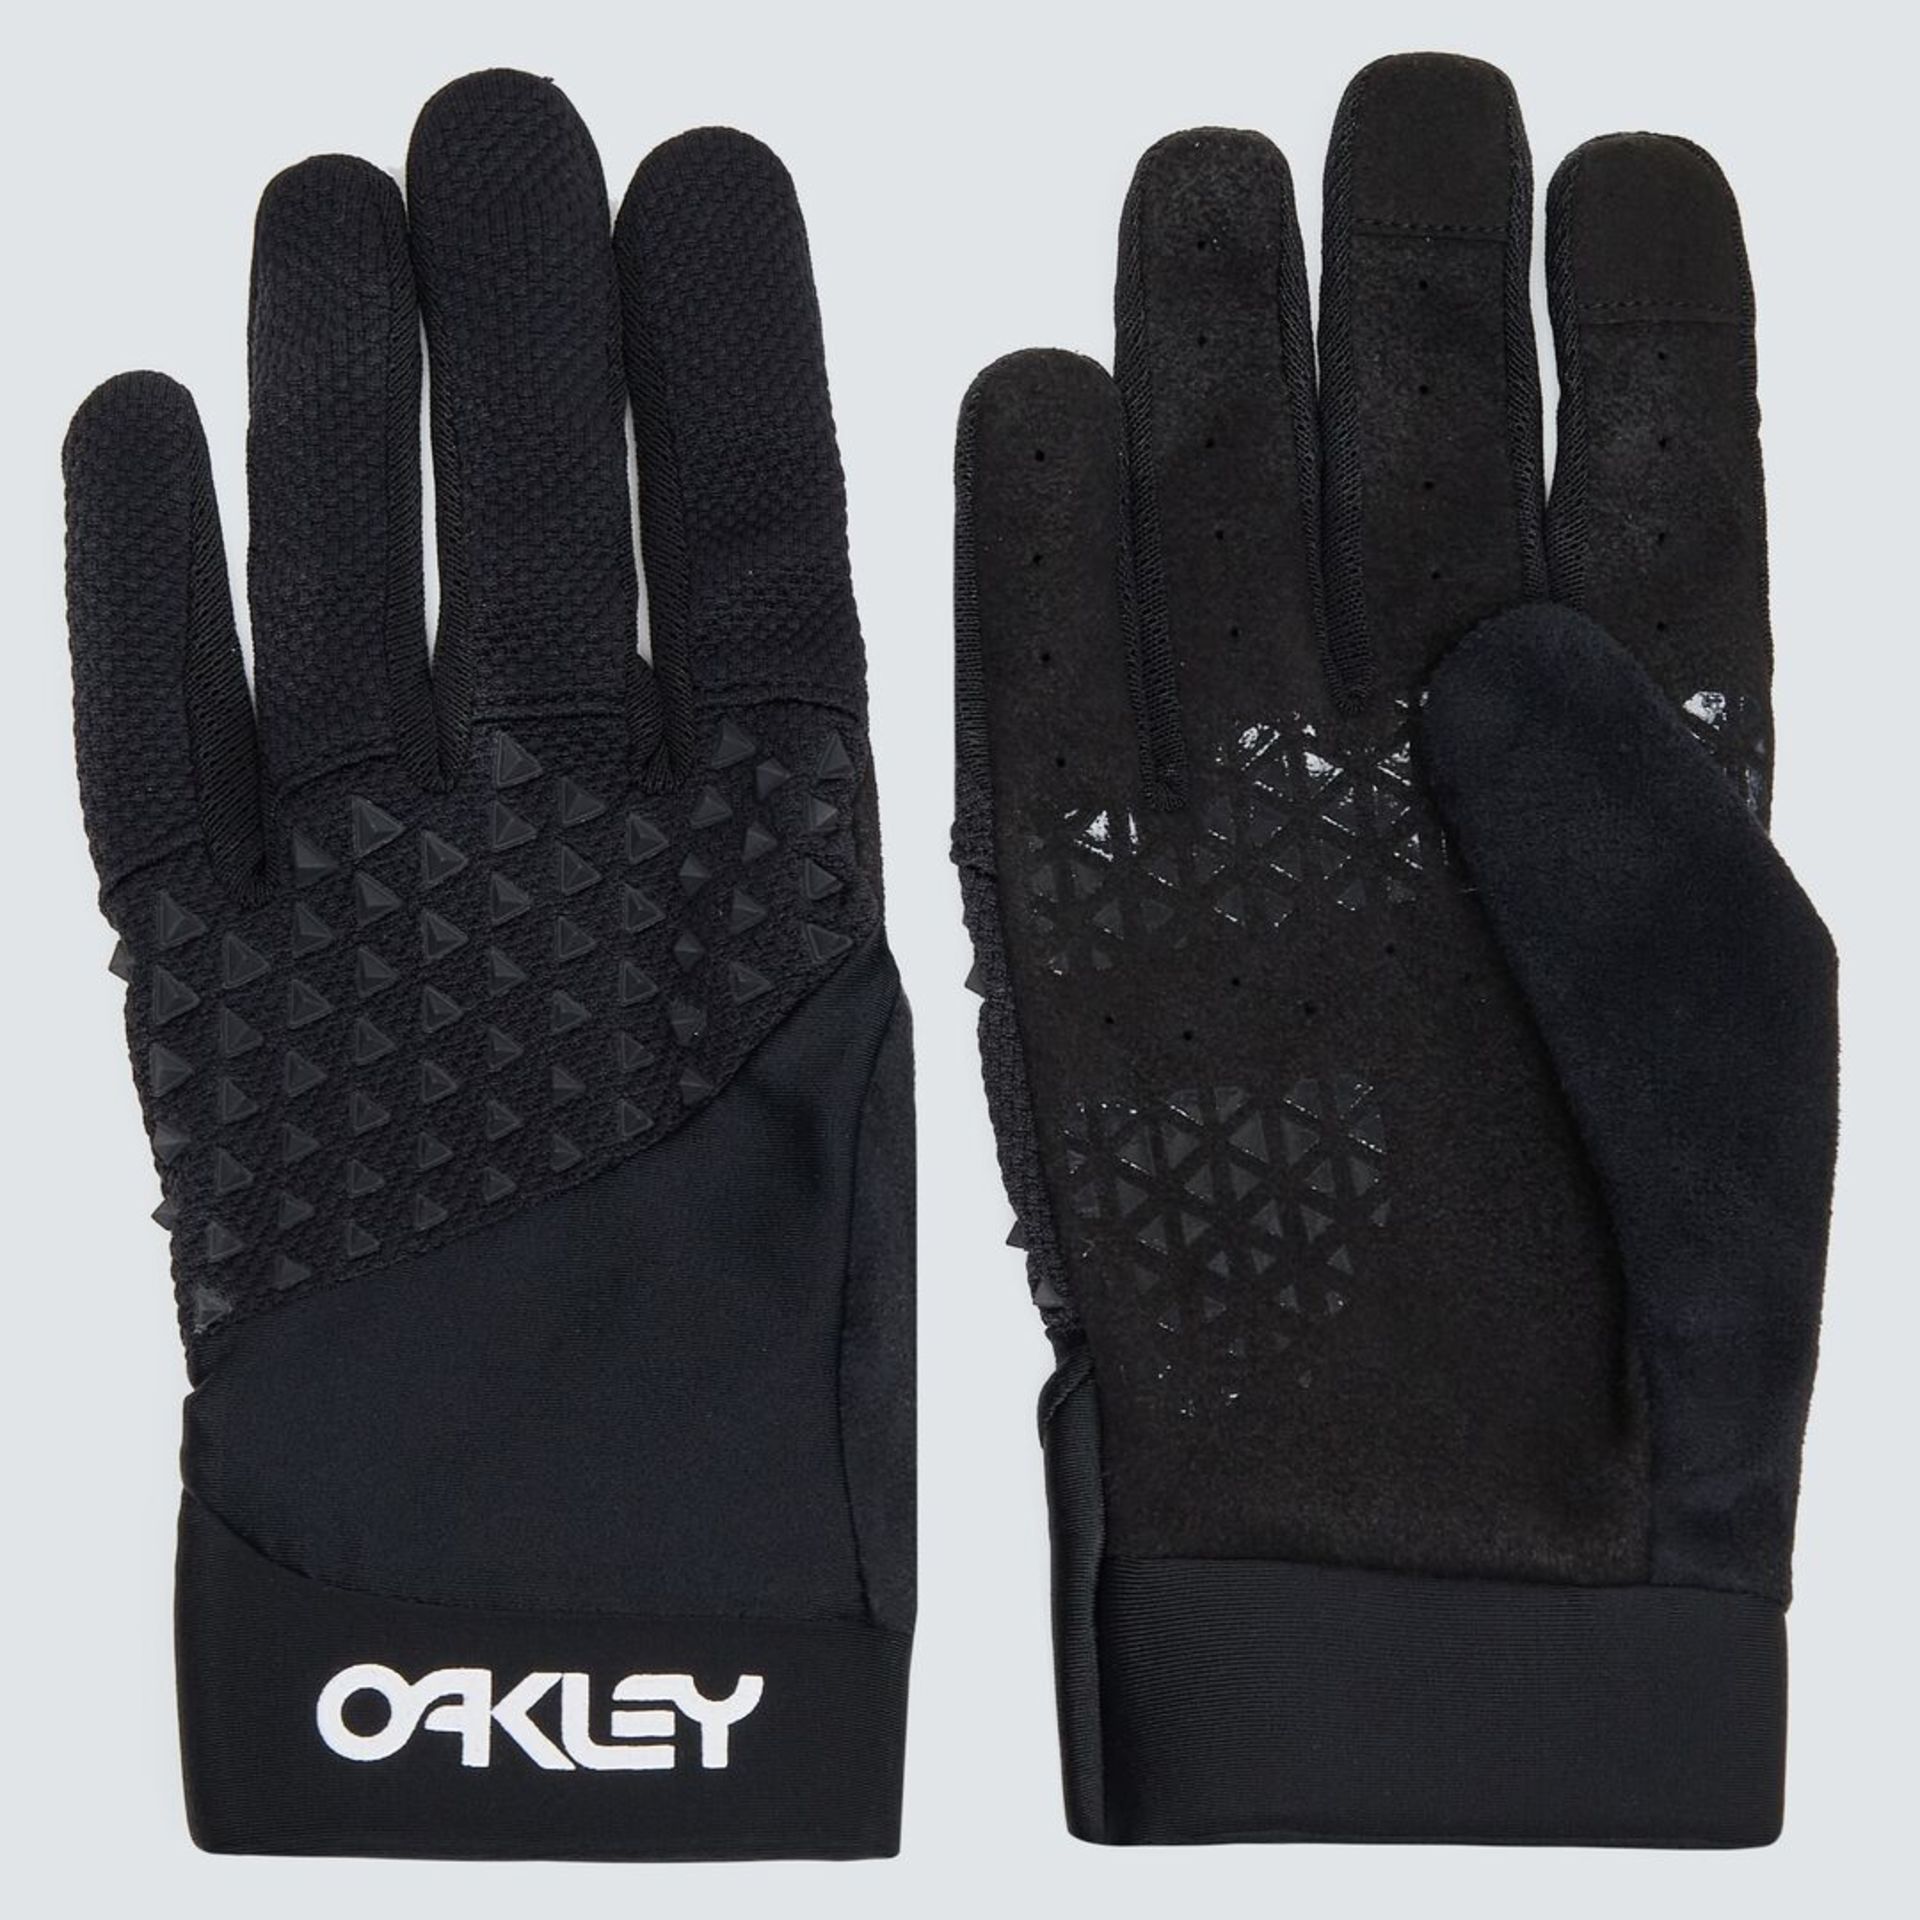 Oakley Drop In MTB Fietshandschoenen Zwart